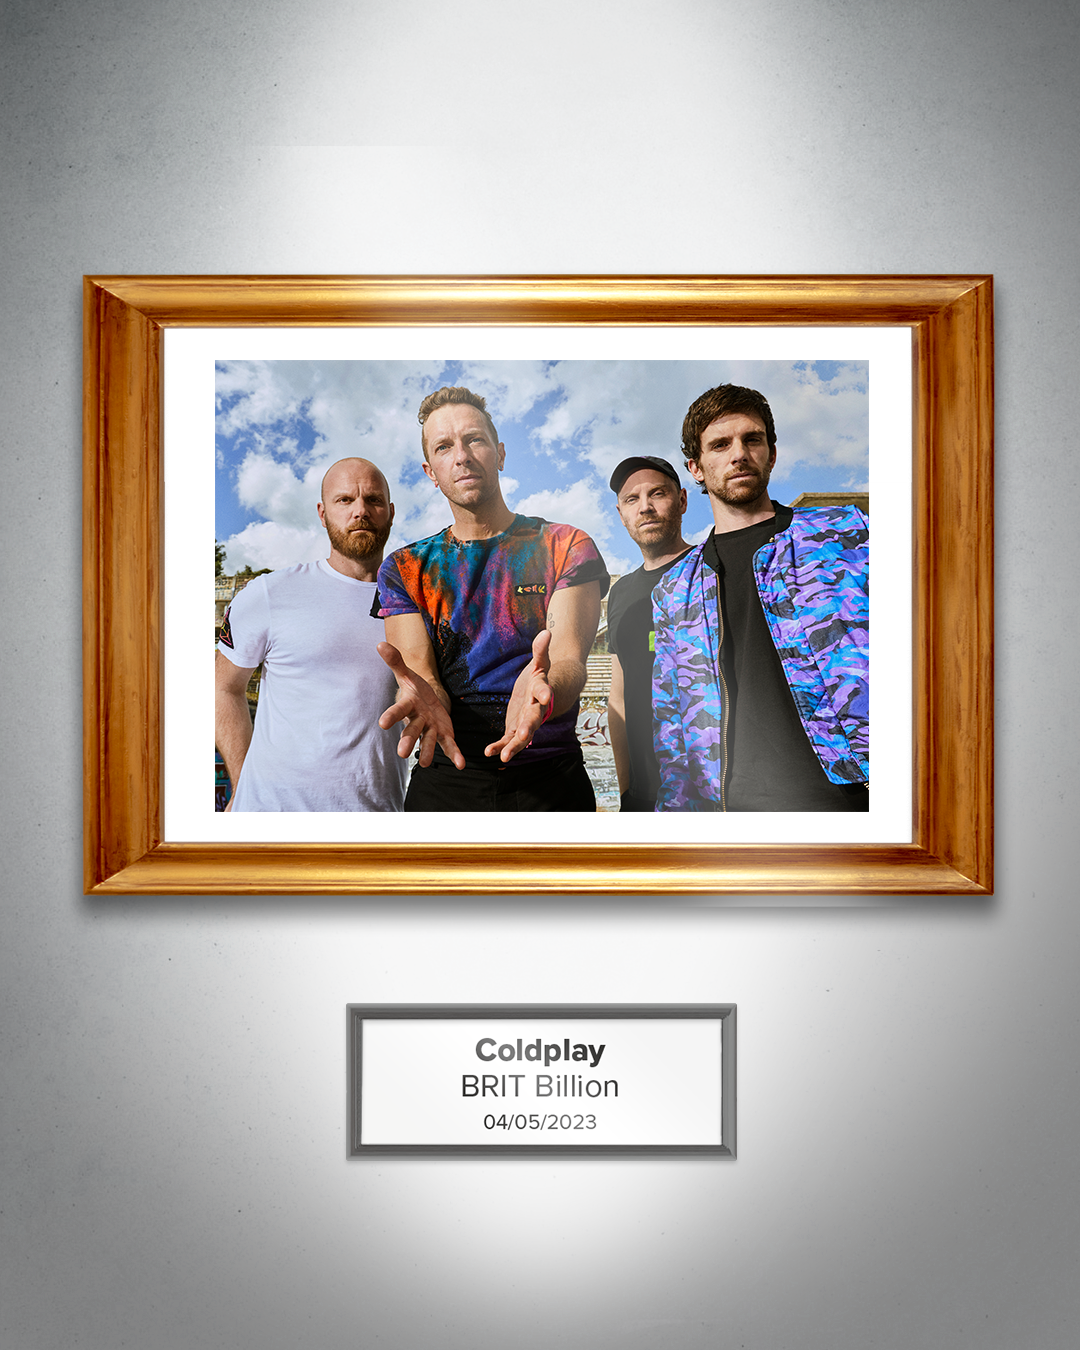 BRIT Billion: Coldplay